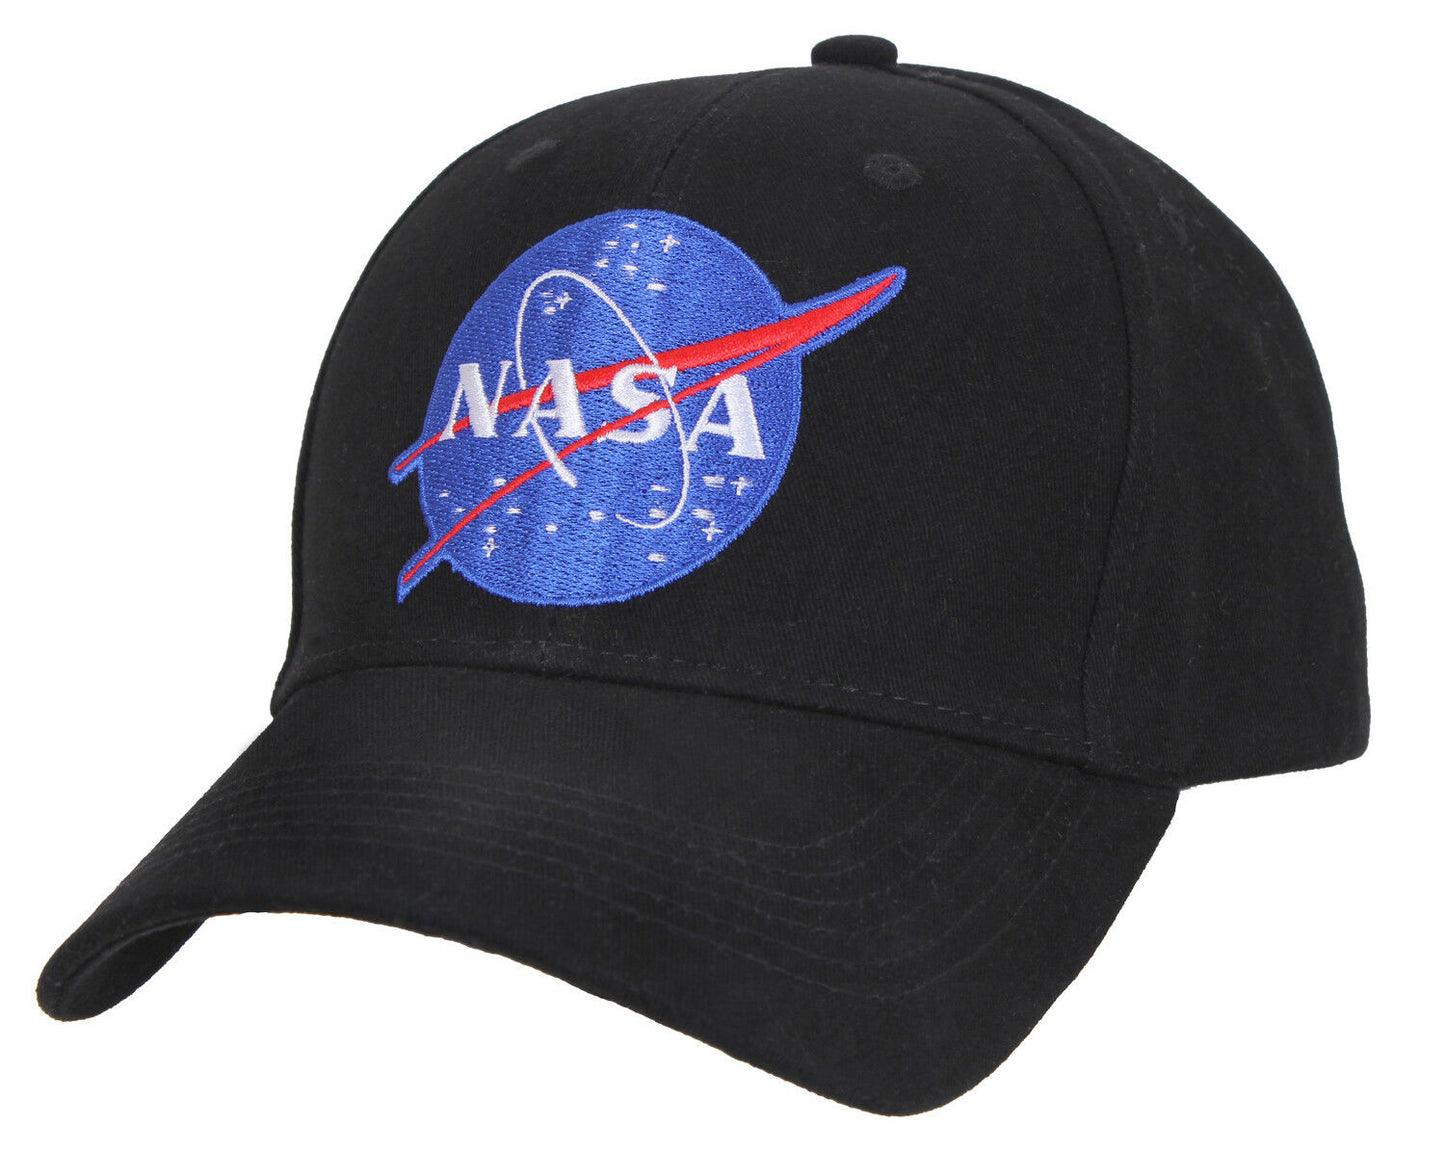 Rothco NASA Low Pro Cap